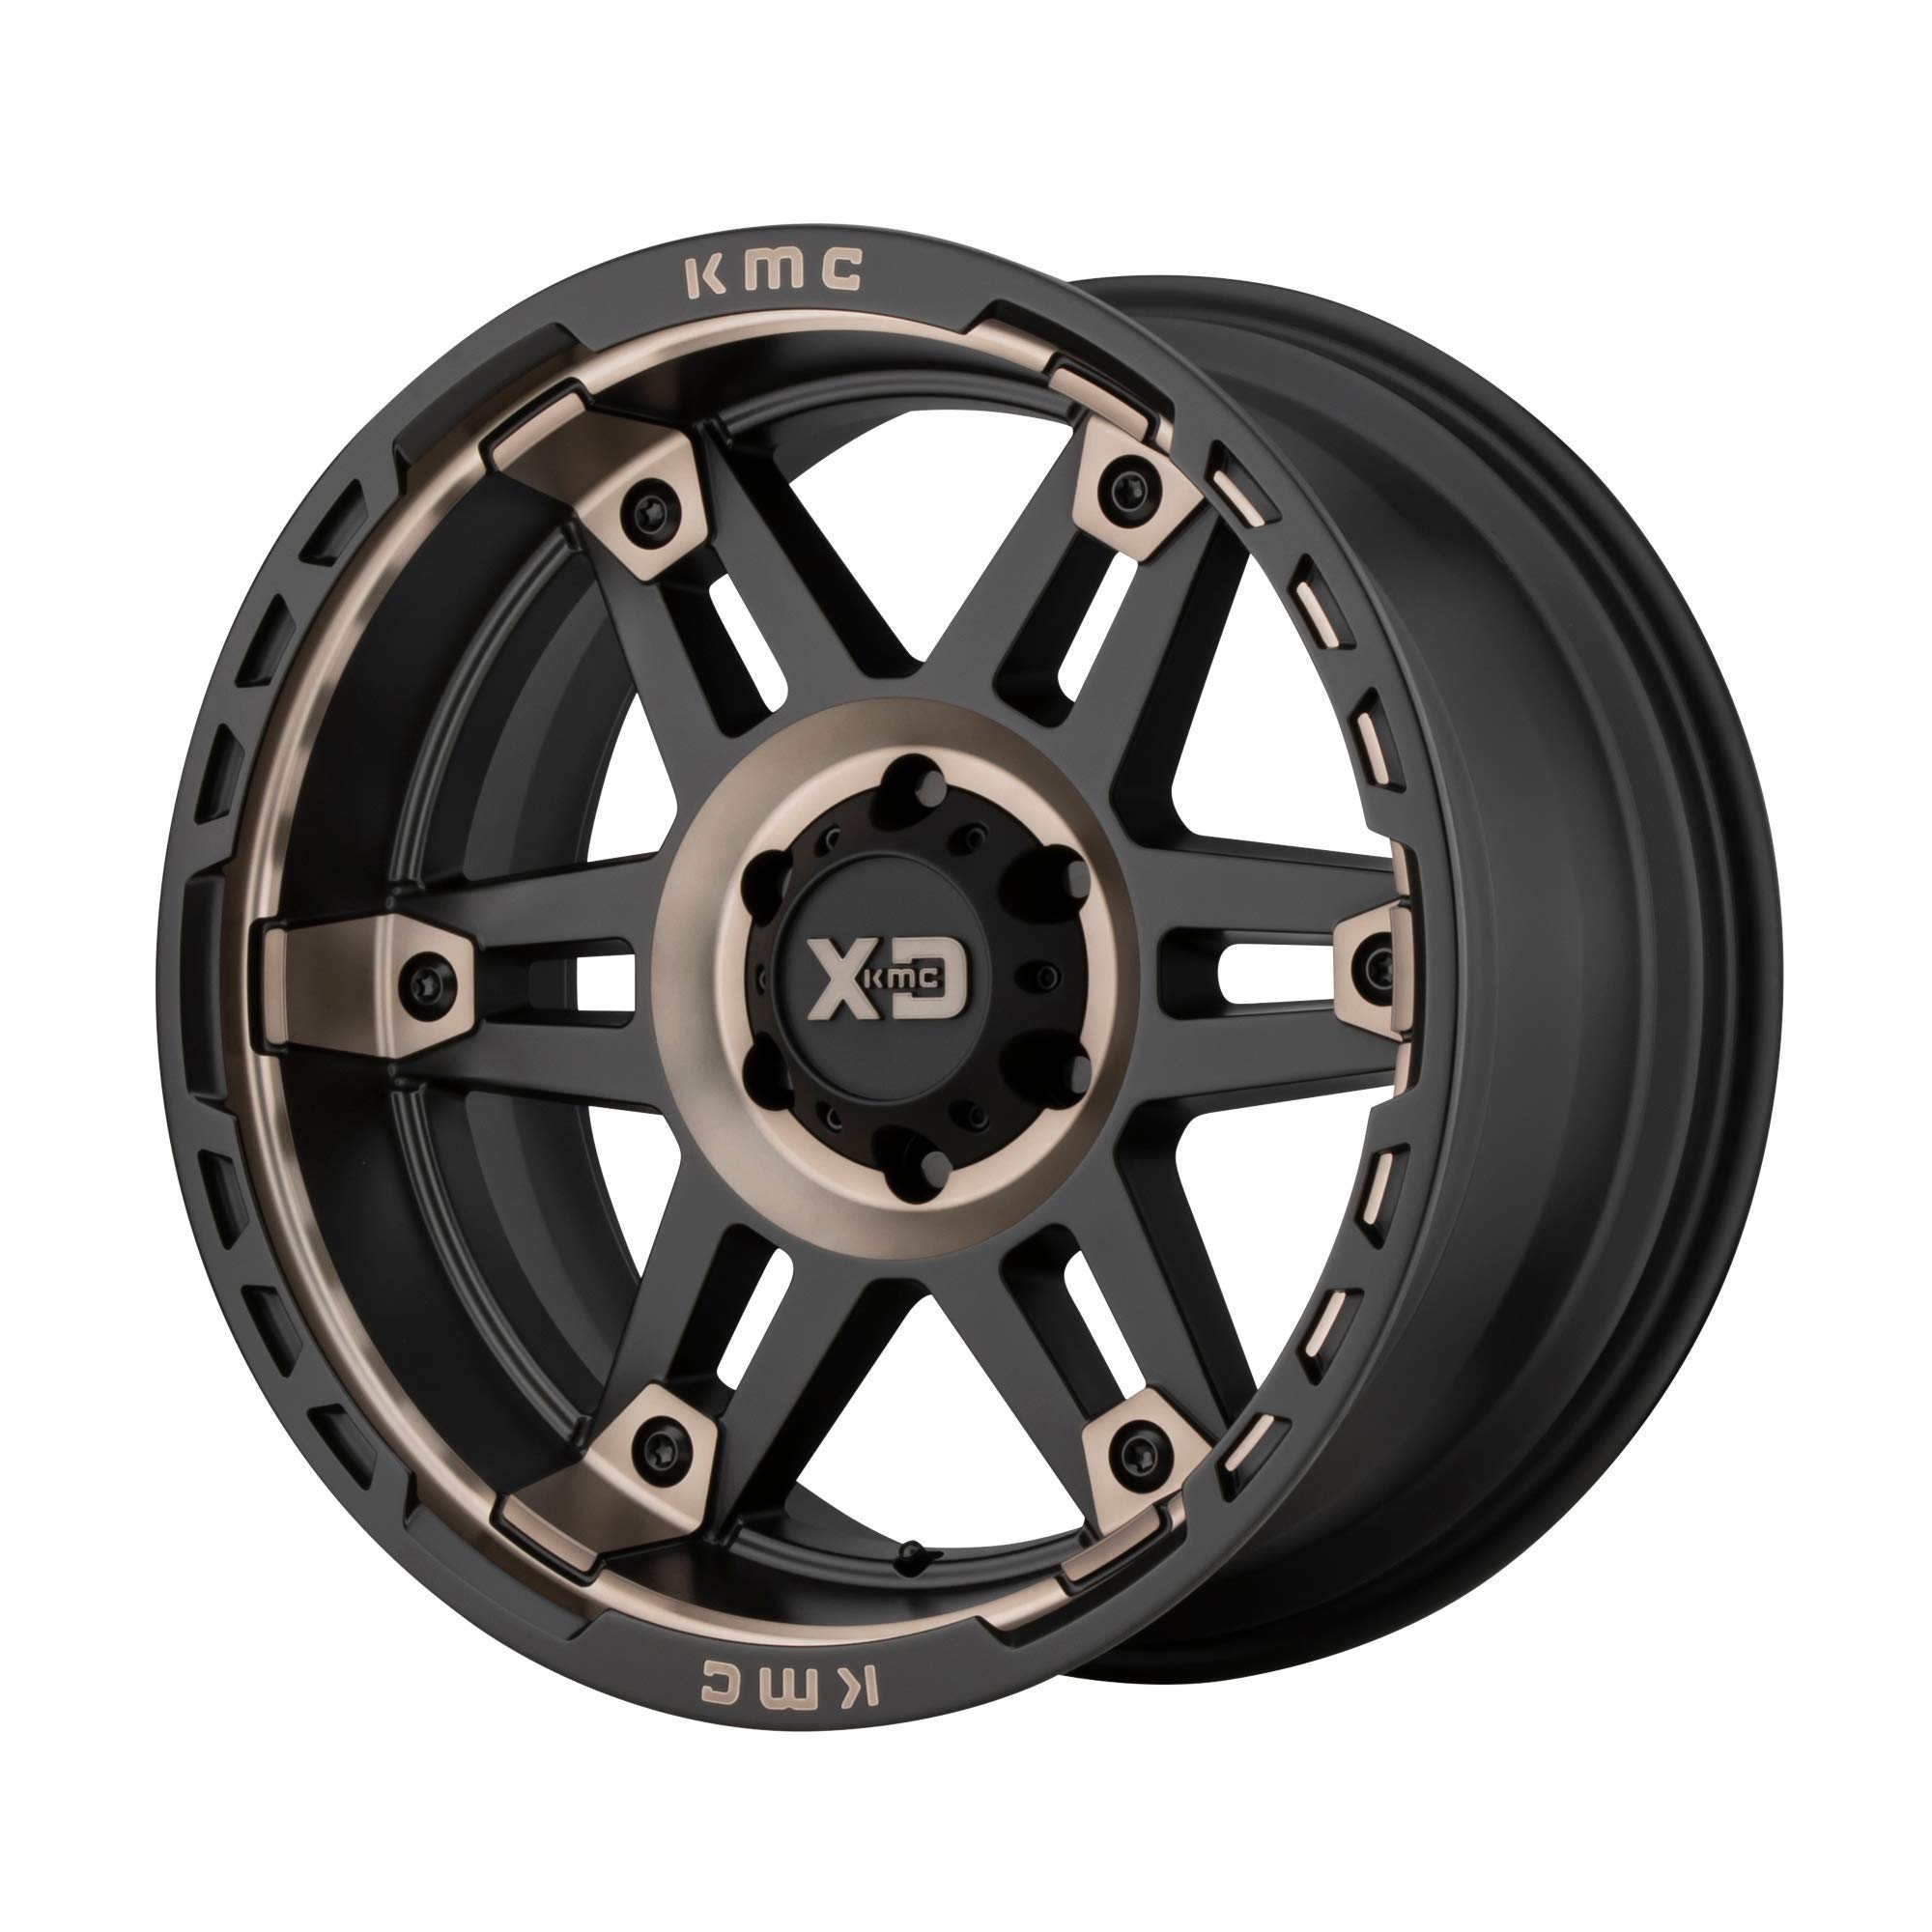 8x165.1 20" Inch 4 Wheels Rims XD XD840 SPY II 20x10-18mm Black Tint